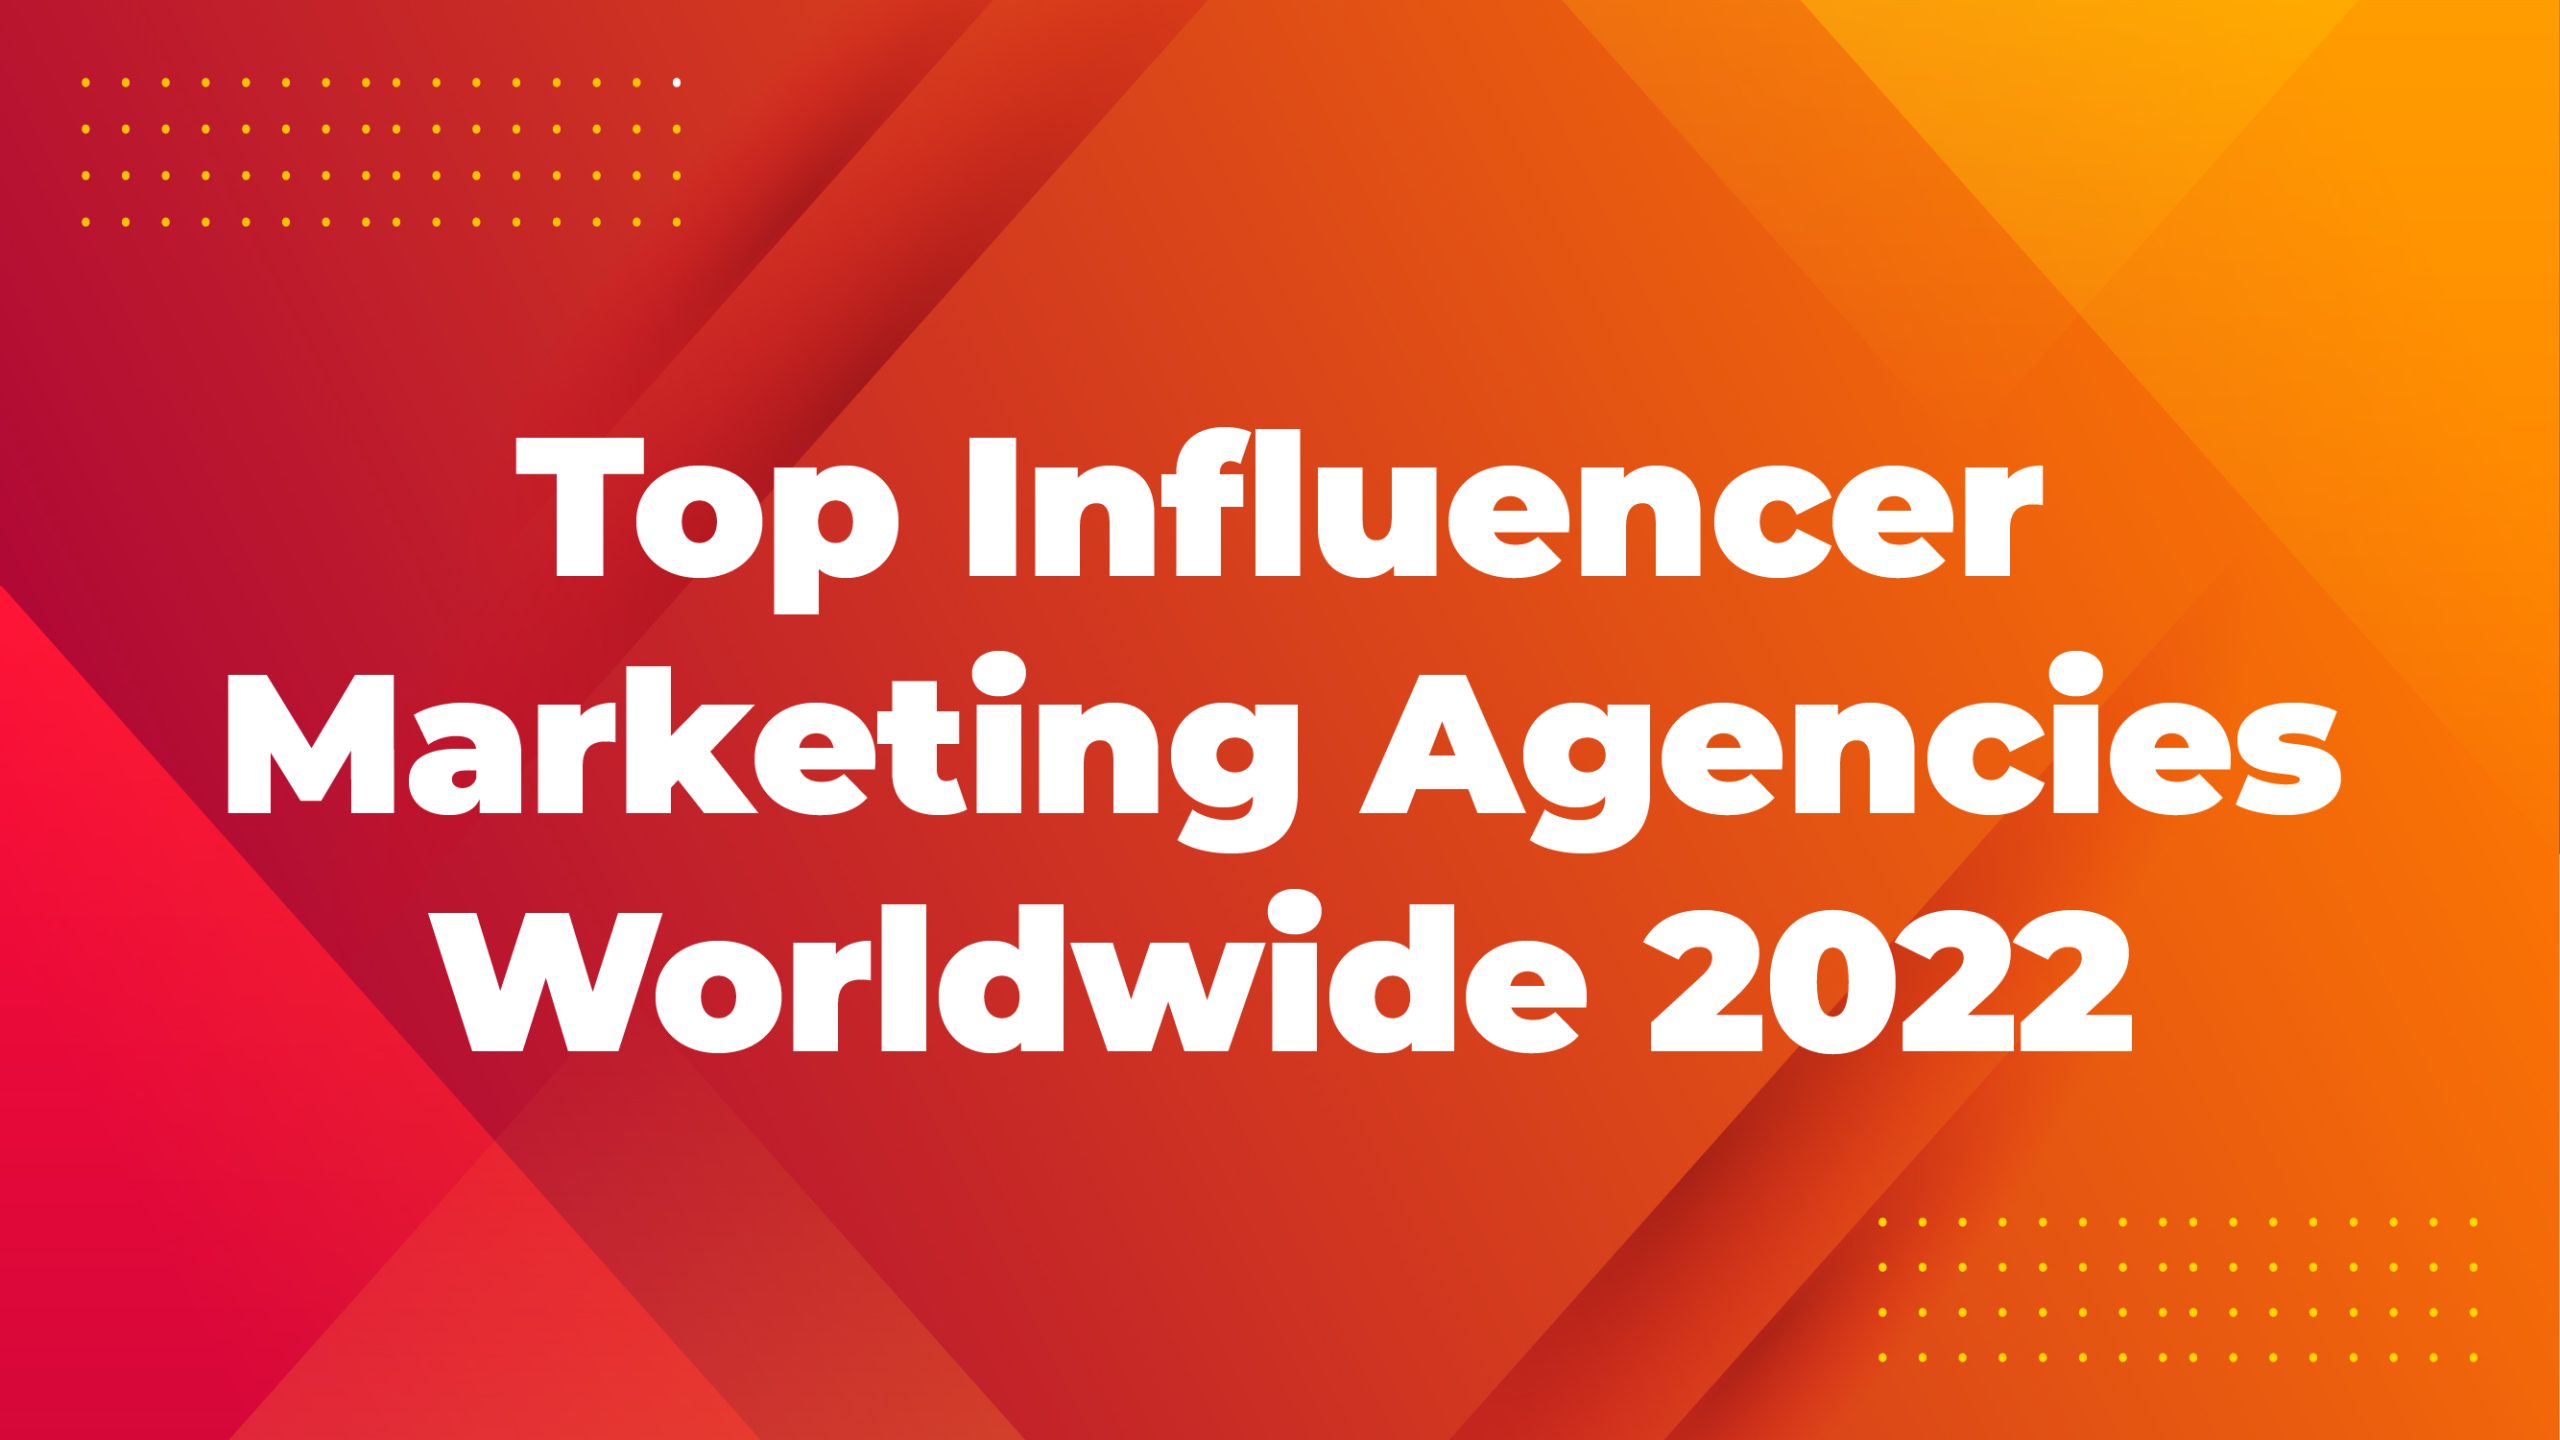 Top Influencer Marketing Agencies Worldwide 2022